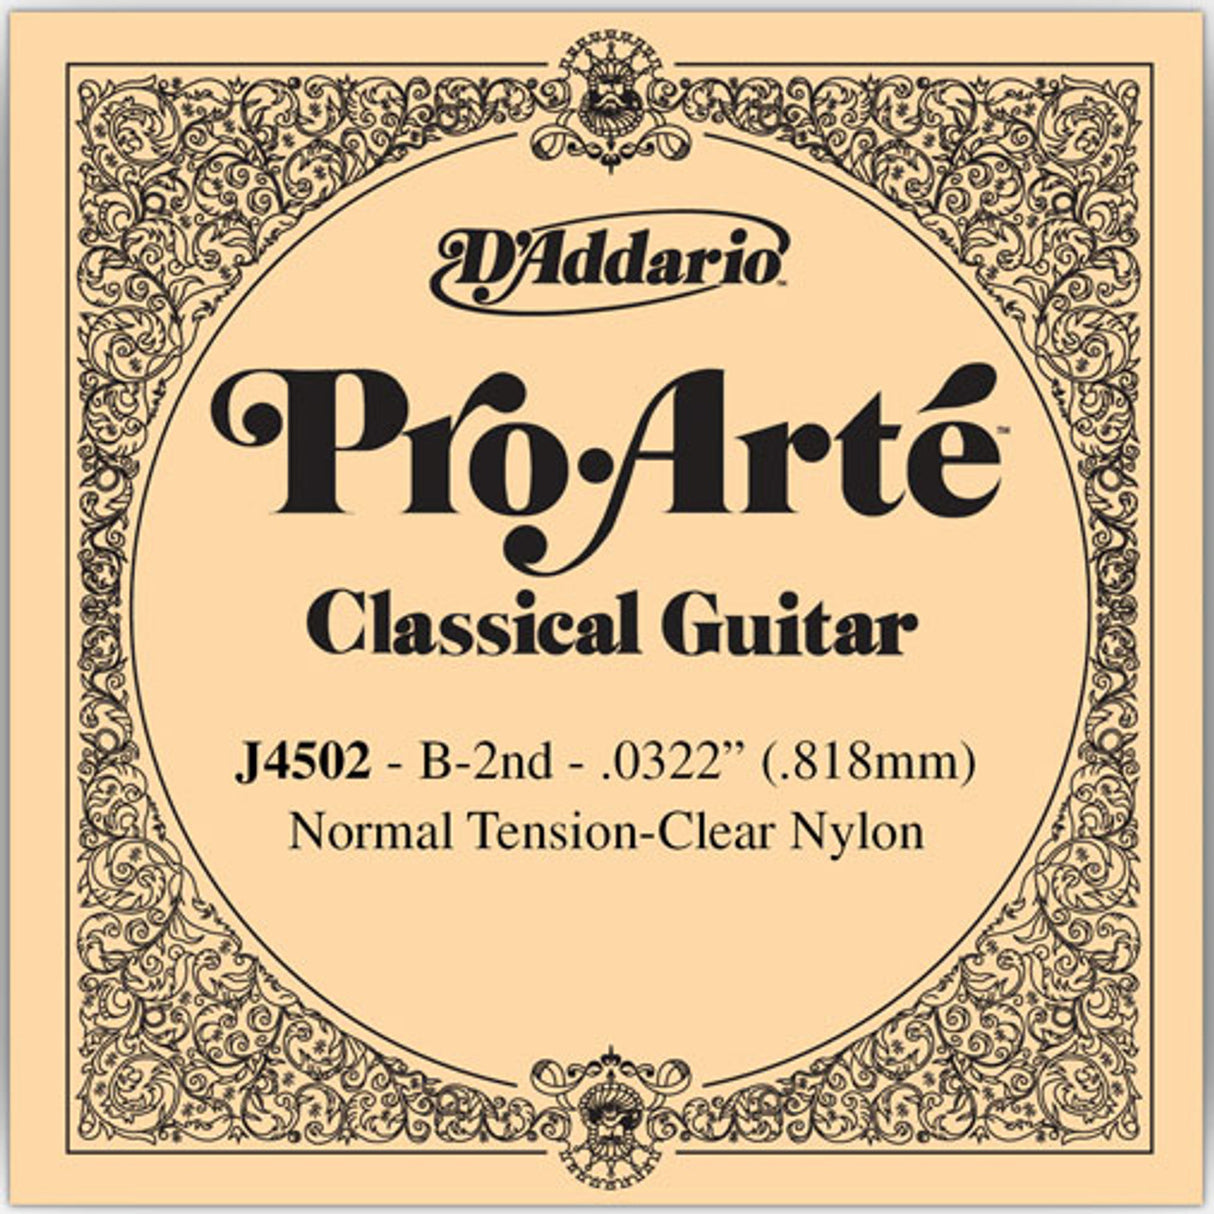 D'Addario Pro Arte Single Classical Guitar Strings - Normal Tension B 2nd